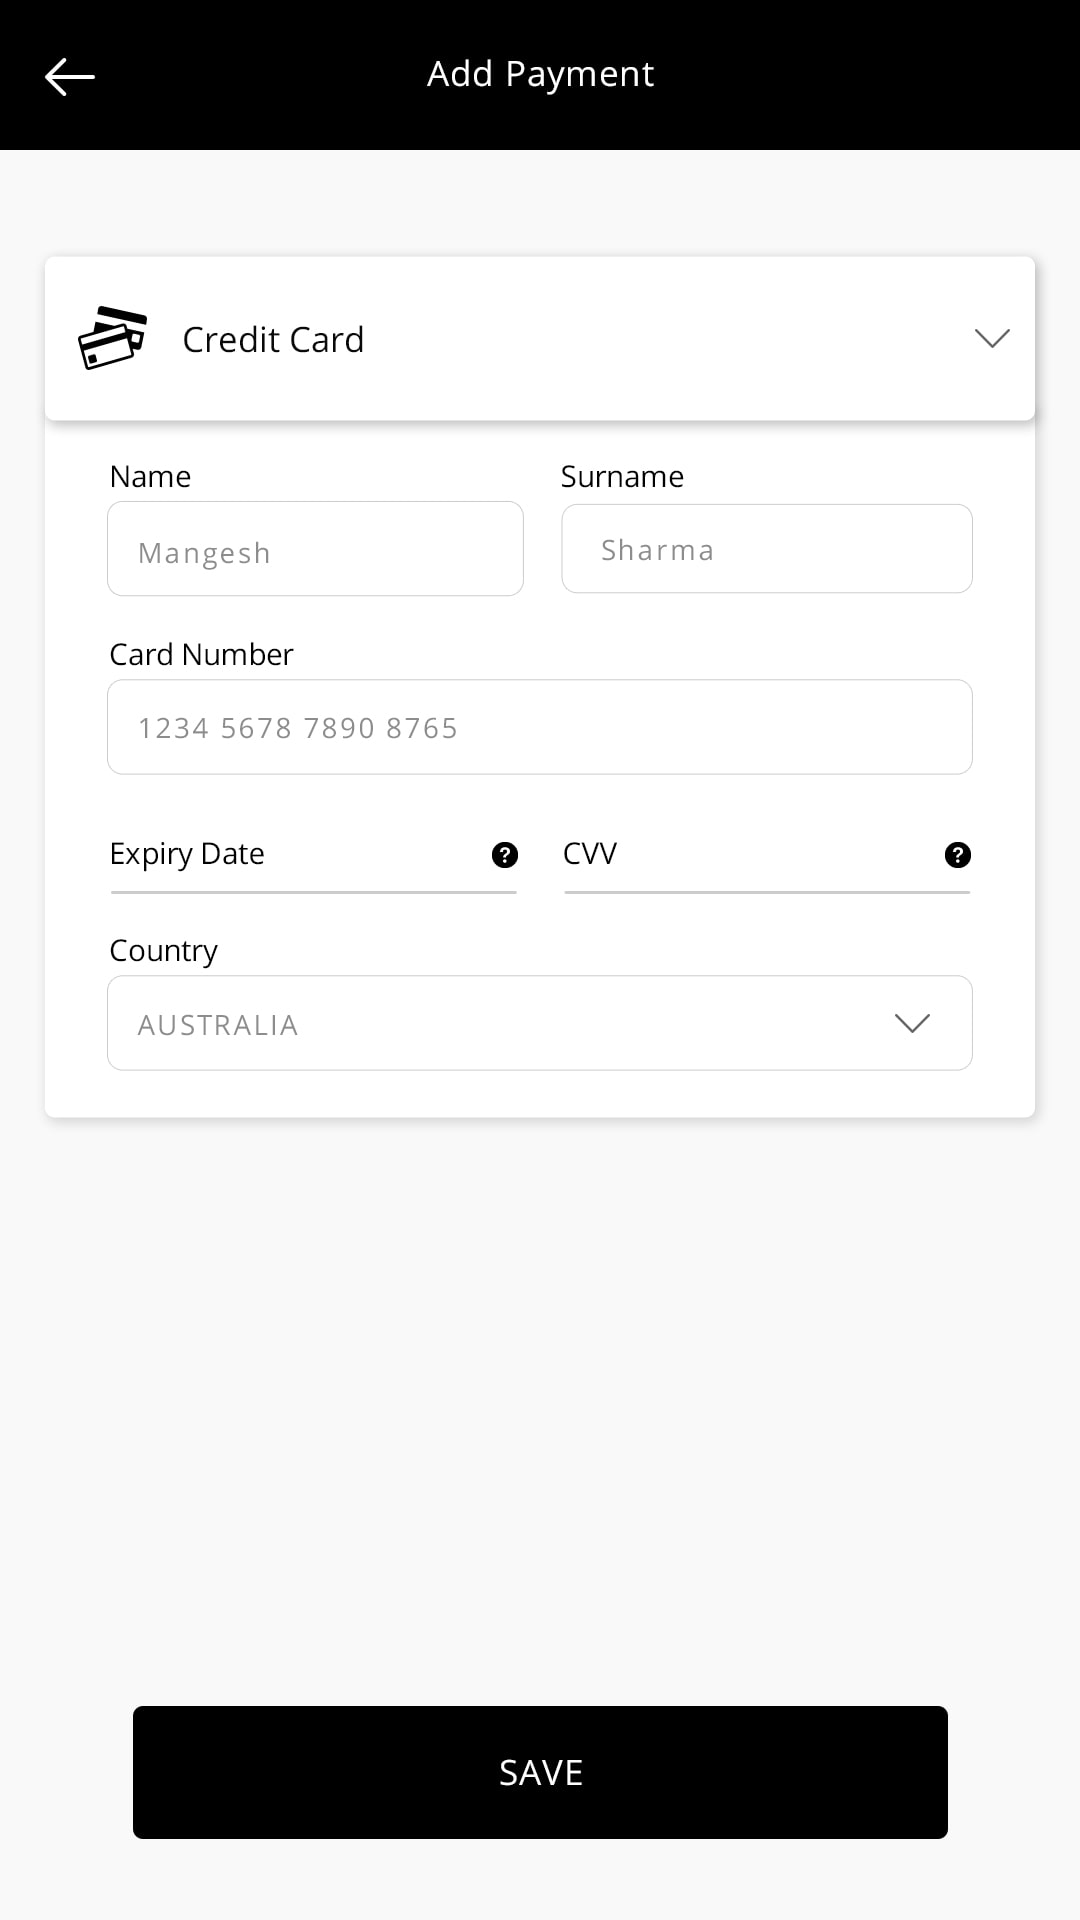 X Solu (ride sharing app) Add Payment screen